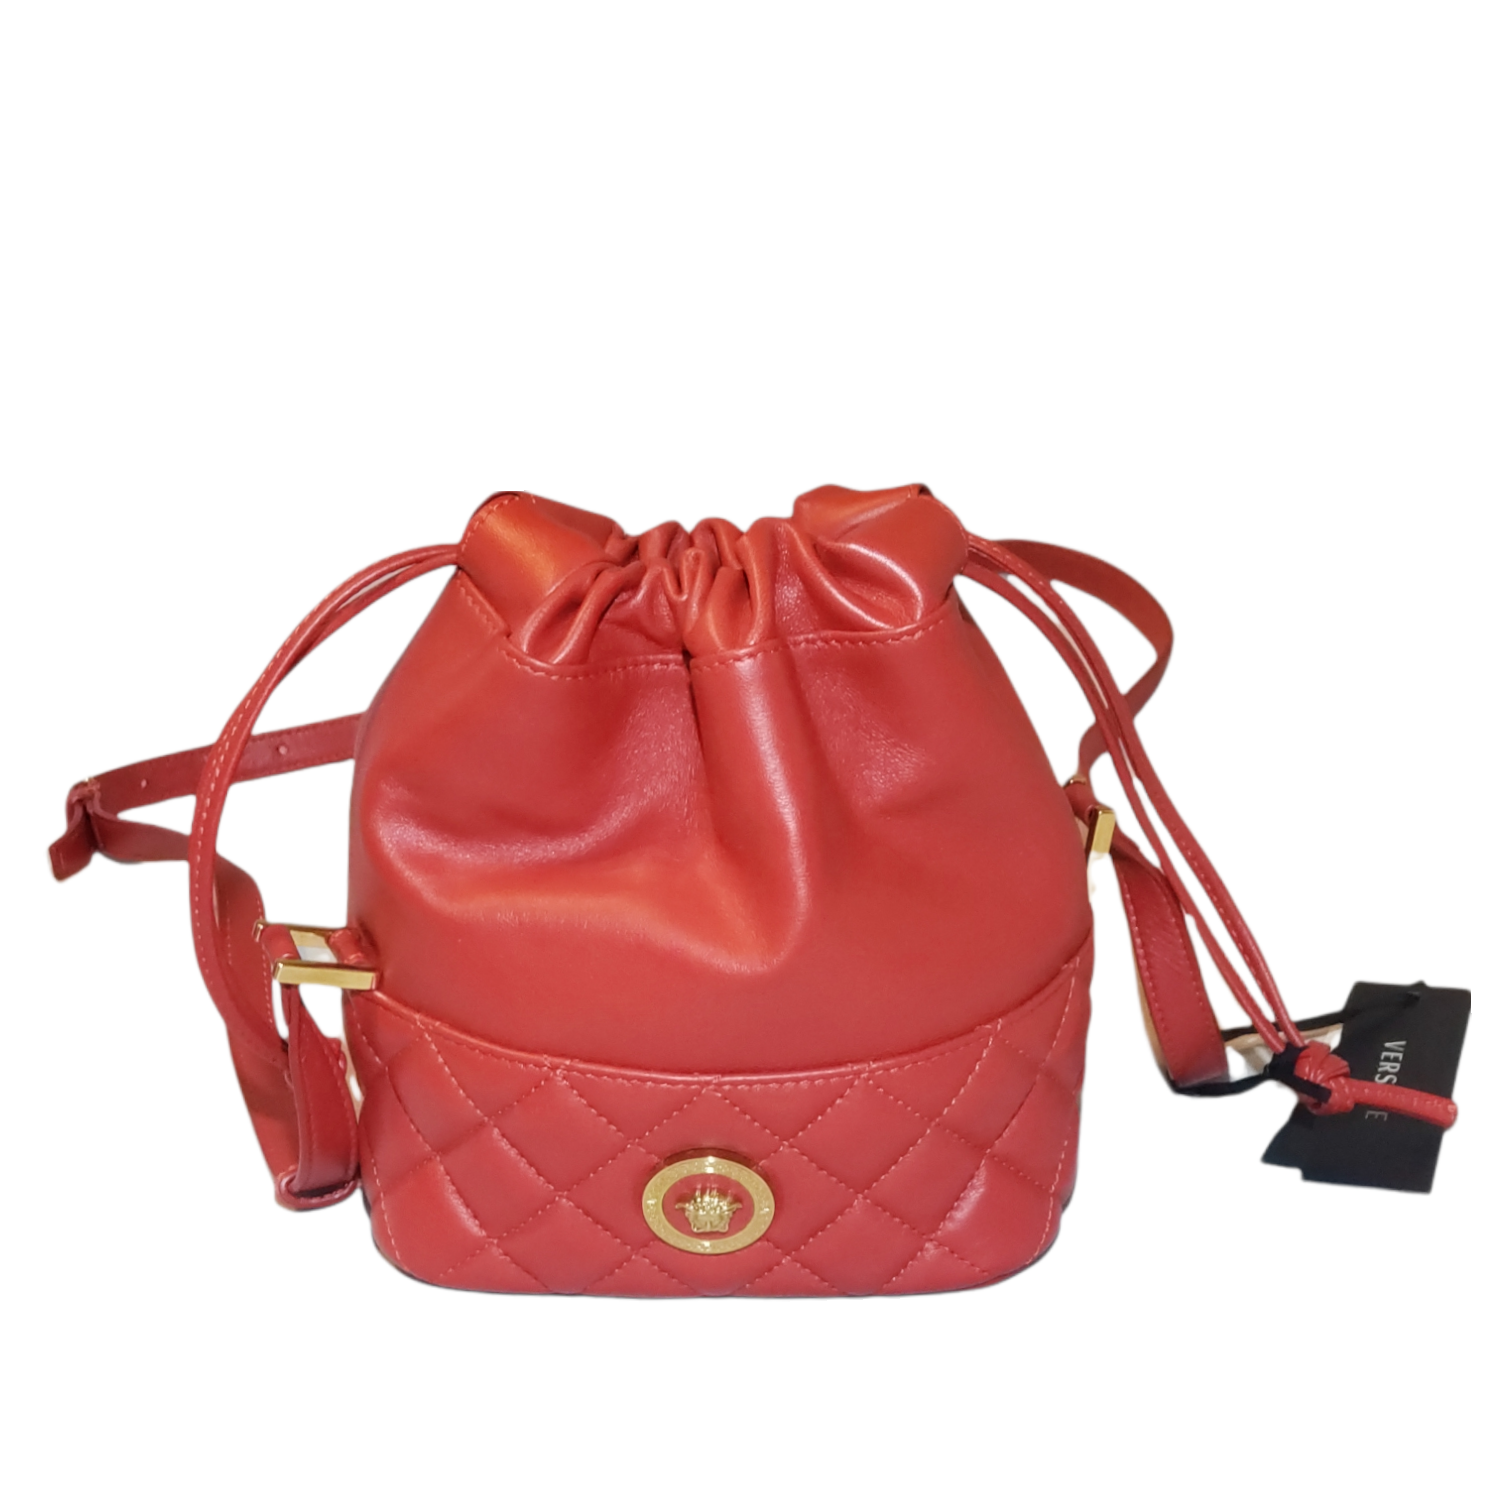 Versace Authenticated Handbag